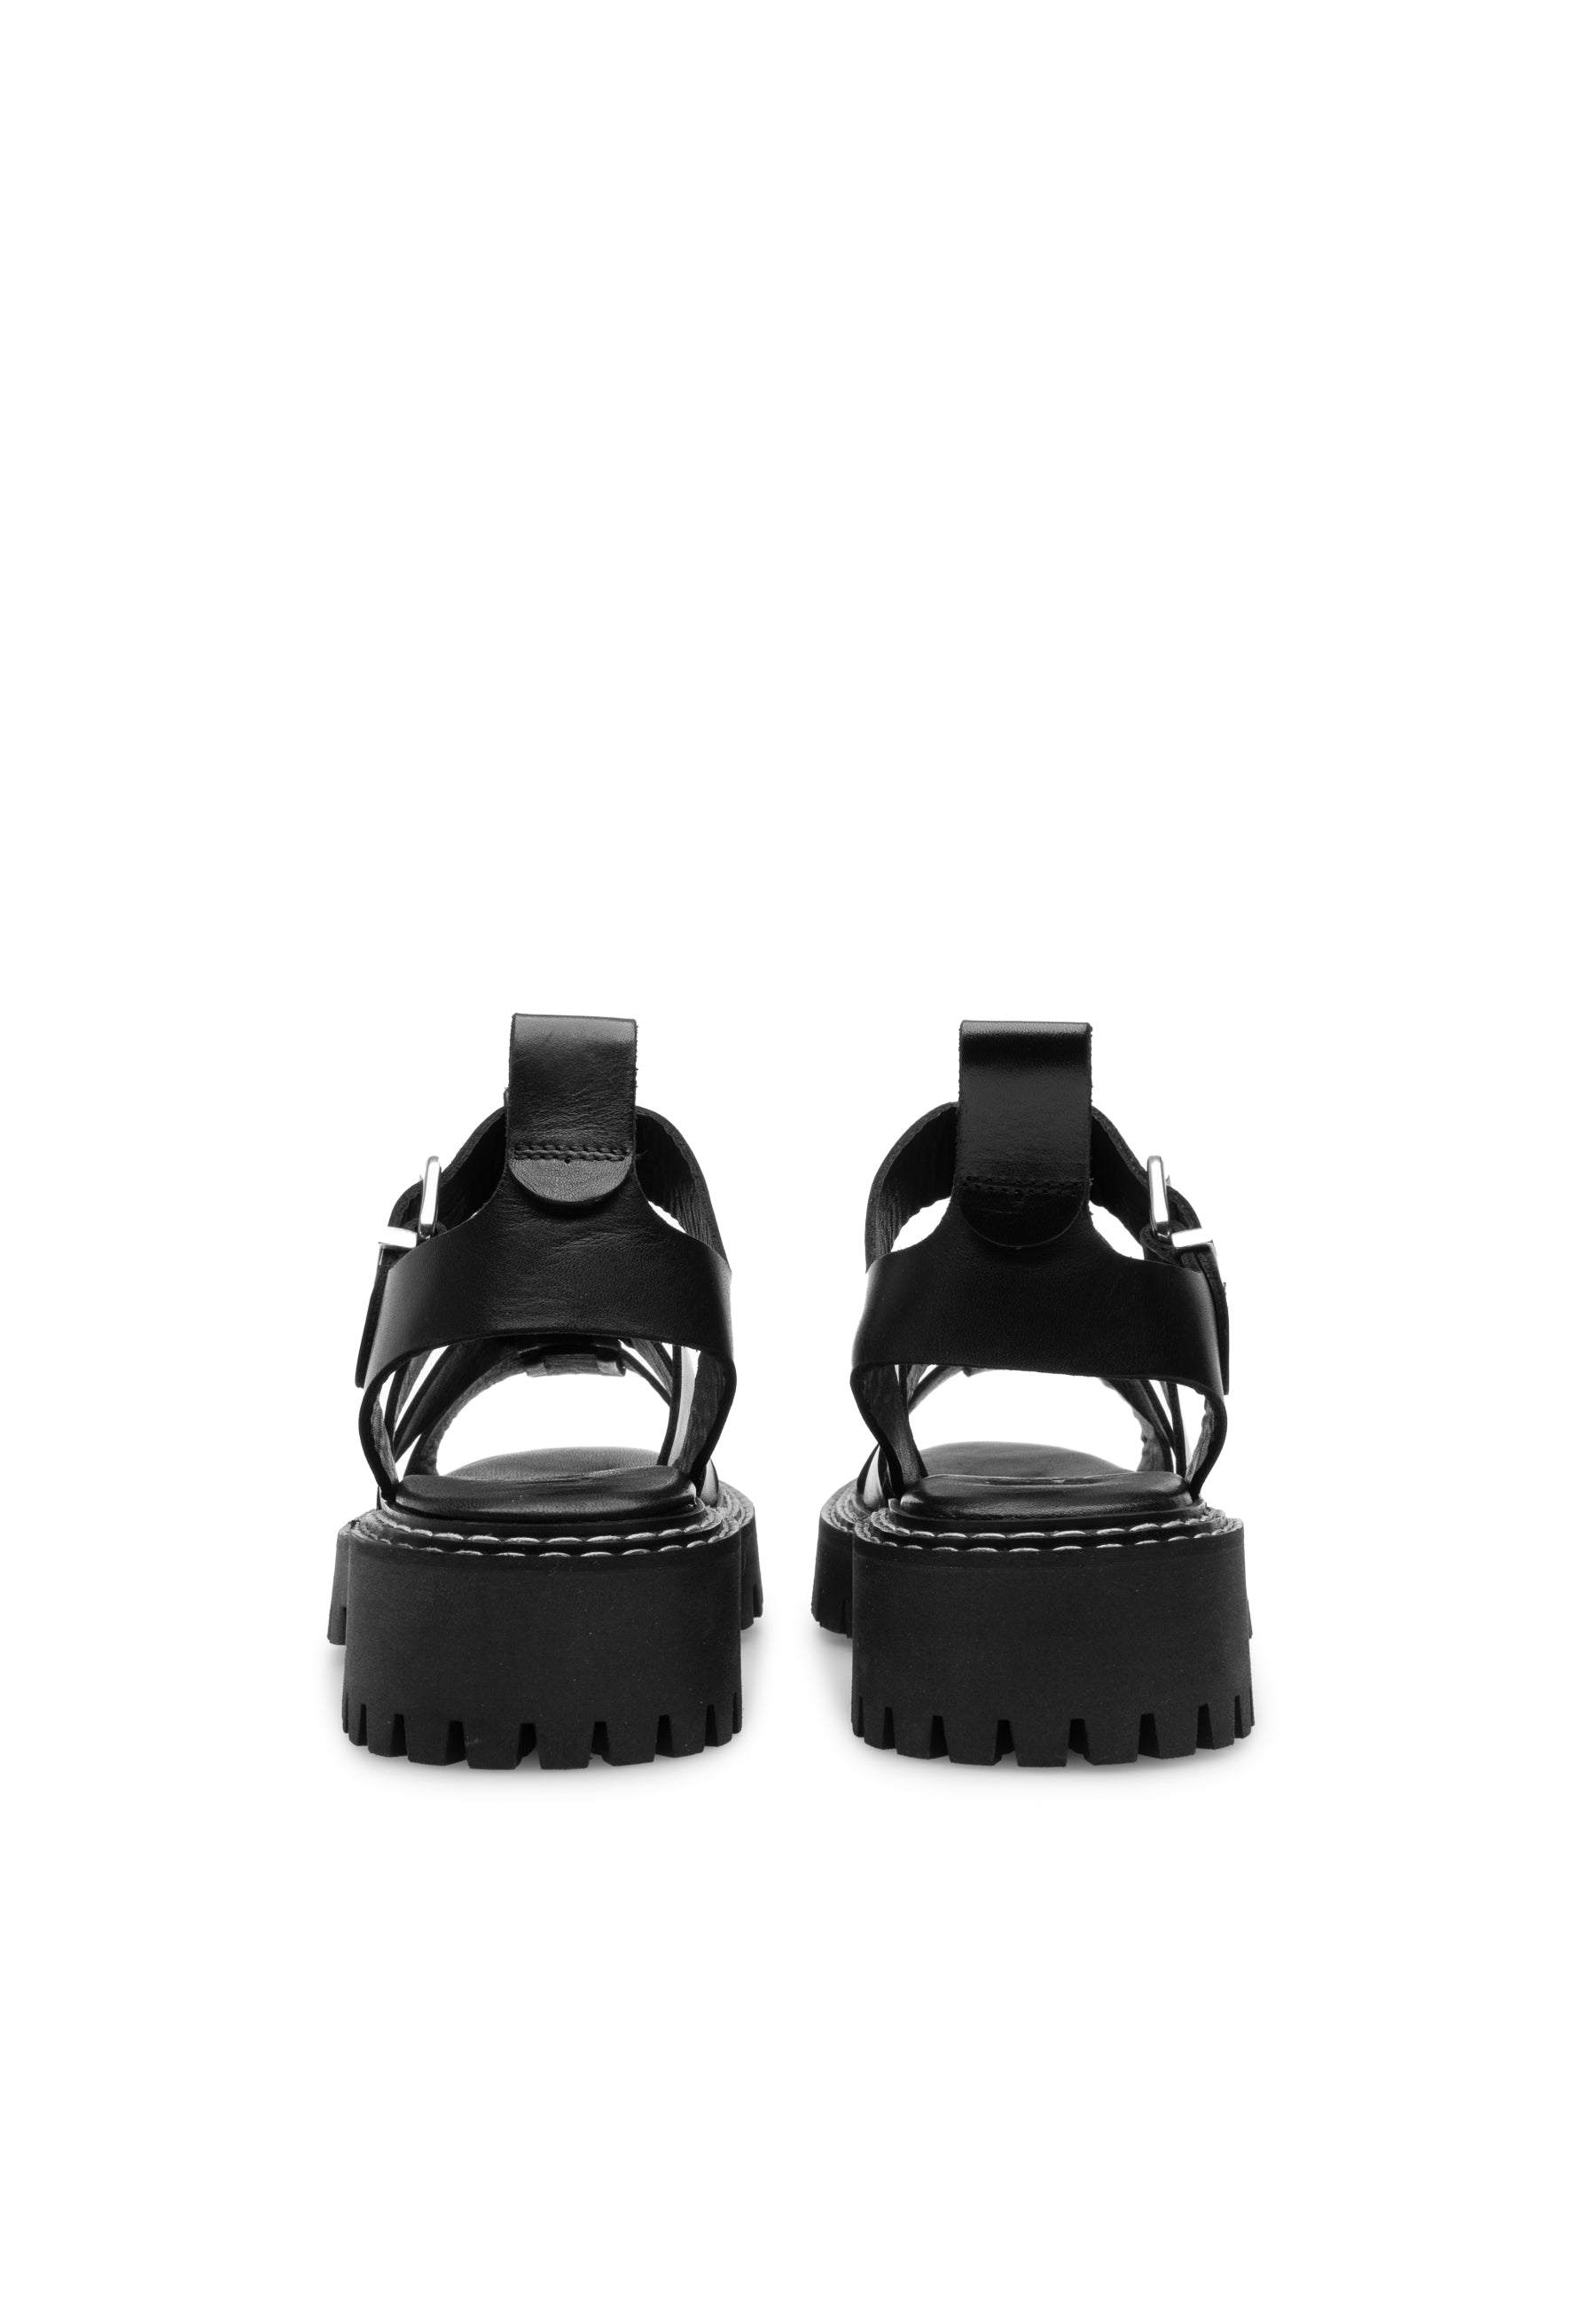 Daphny Black Leather Chunky Sandals LAST1518 - 5